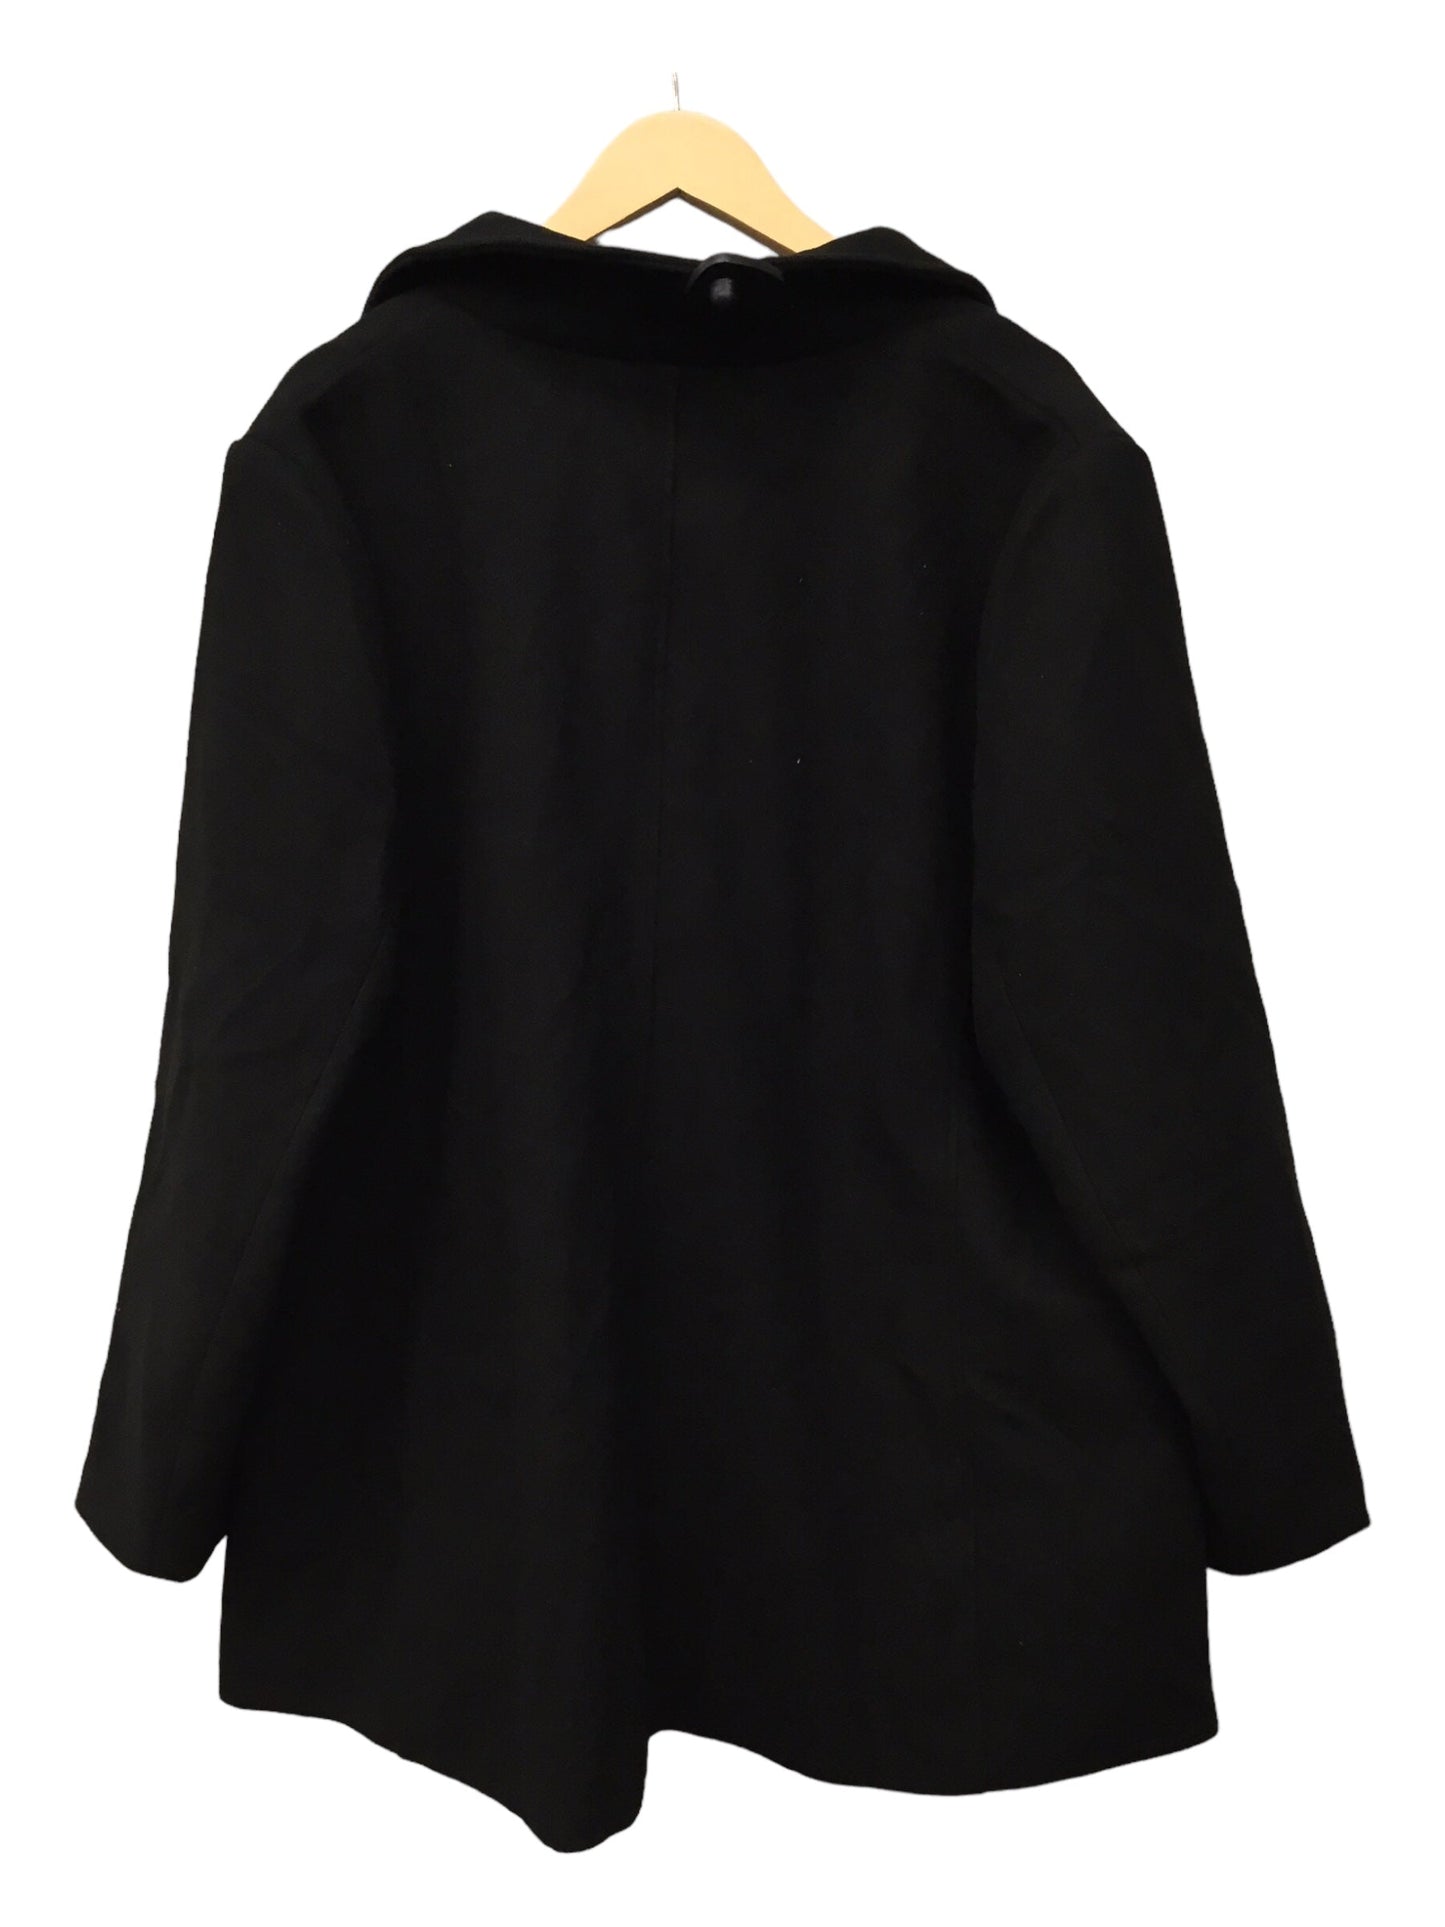 NWT Black Coat Peacoat Agnes Orinda, Size 4x